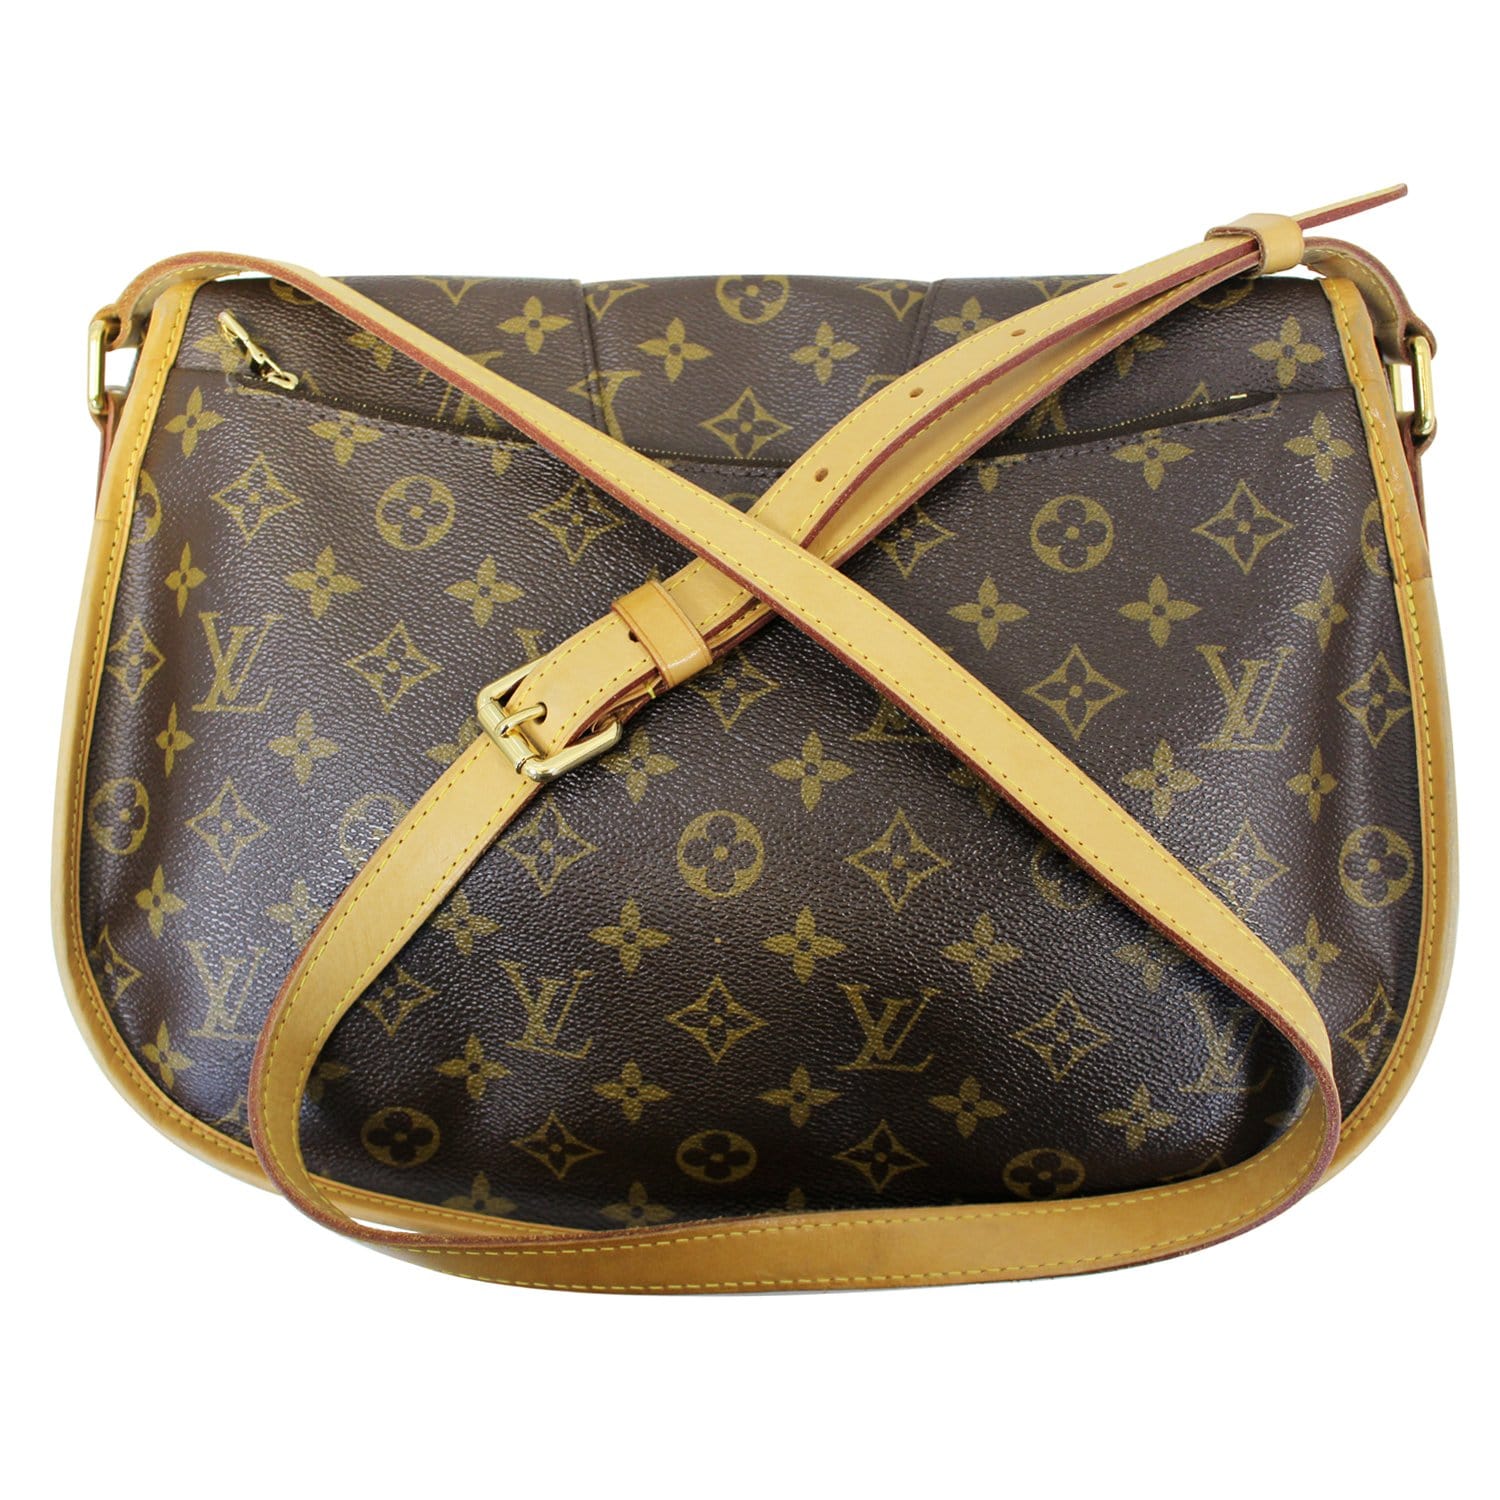 Louis Vuitton Menilmentant Crossbody Bag. BLACK FRIDAY DEAL 